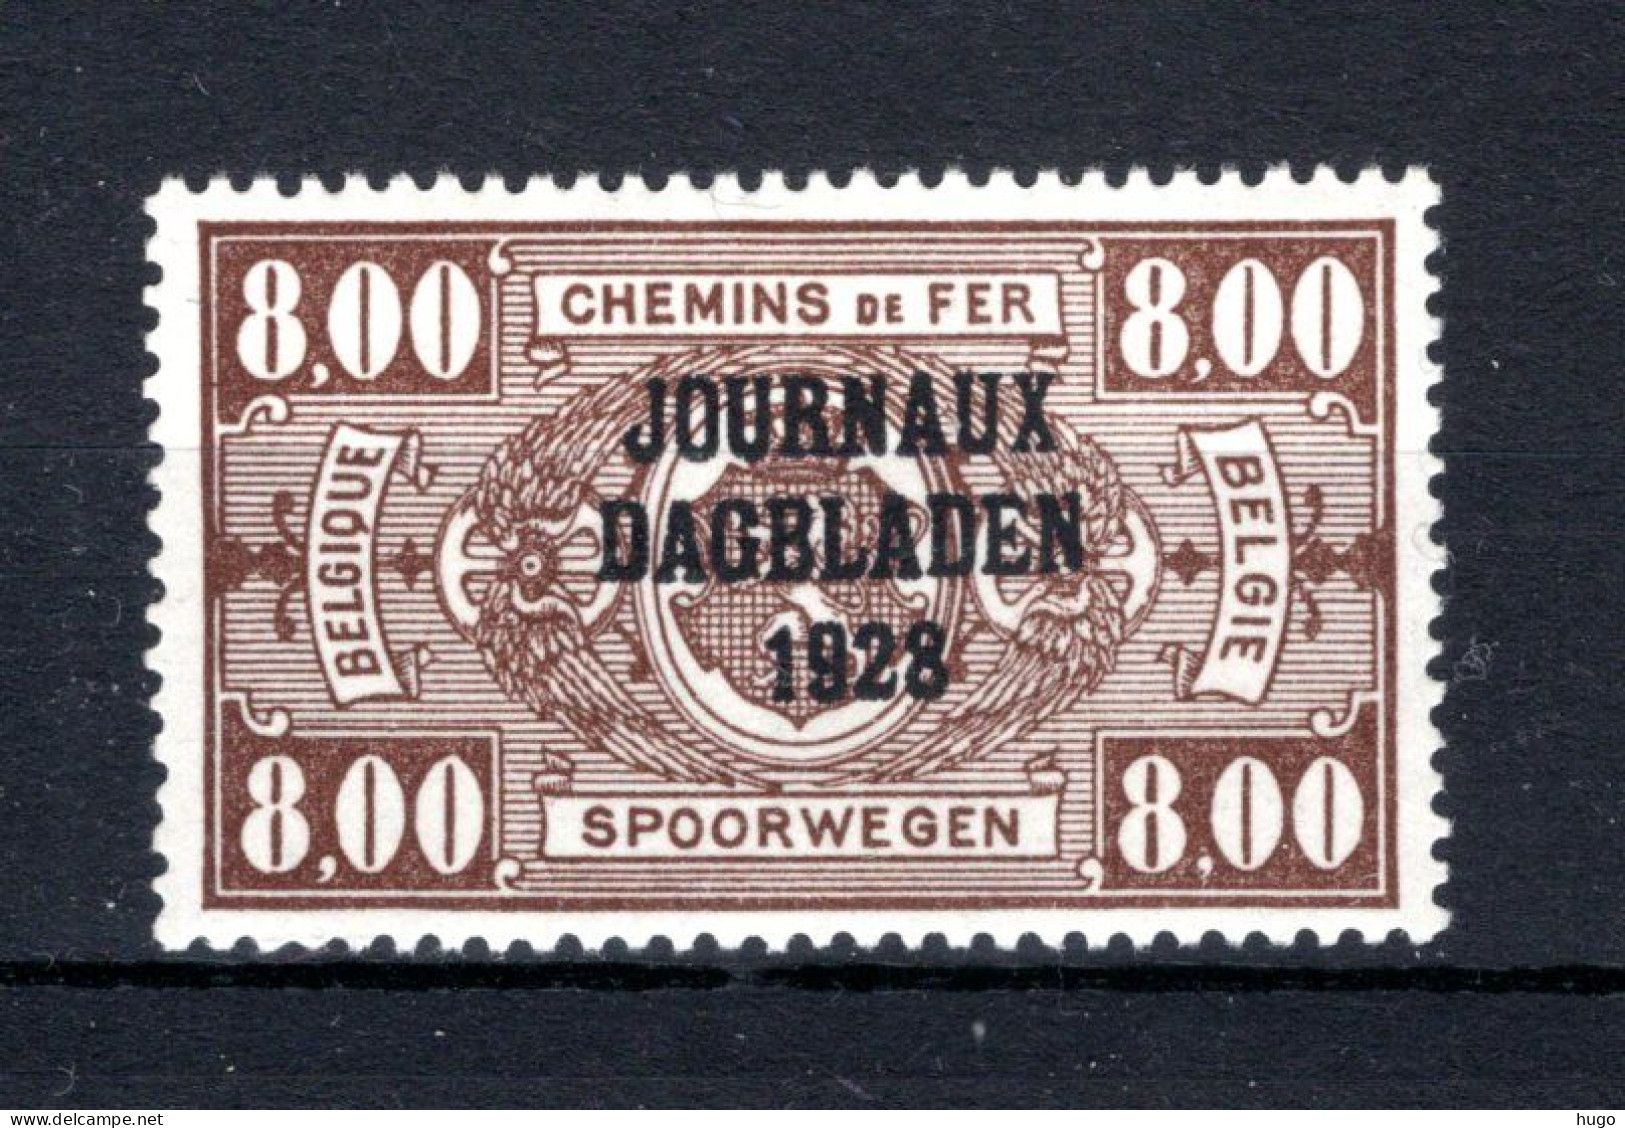 JO15 MNH** 1928 - Postpakketzegels "JOURNEAUX - DAGBLADEN 1928" - Sot - Newspaper [JO]